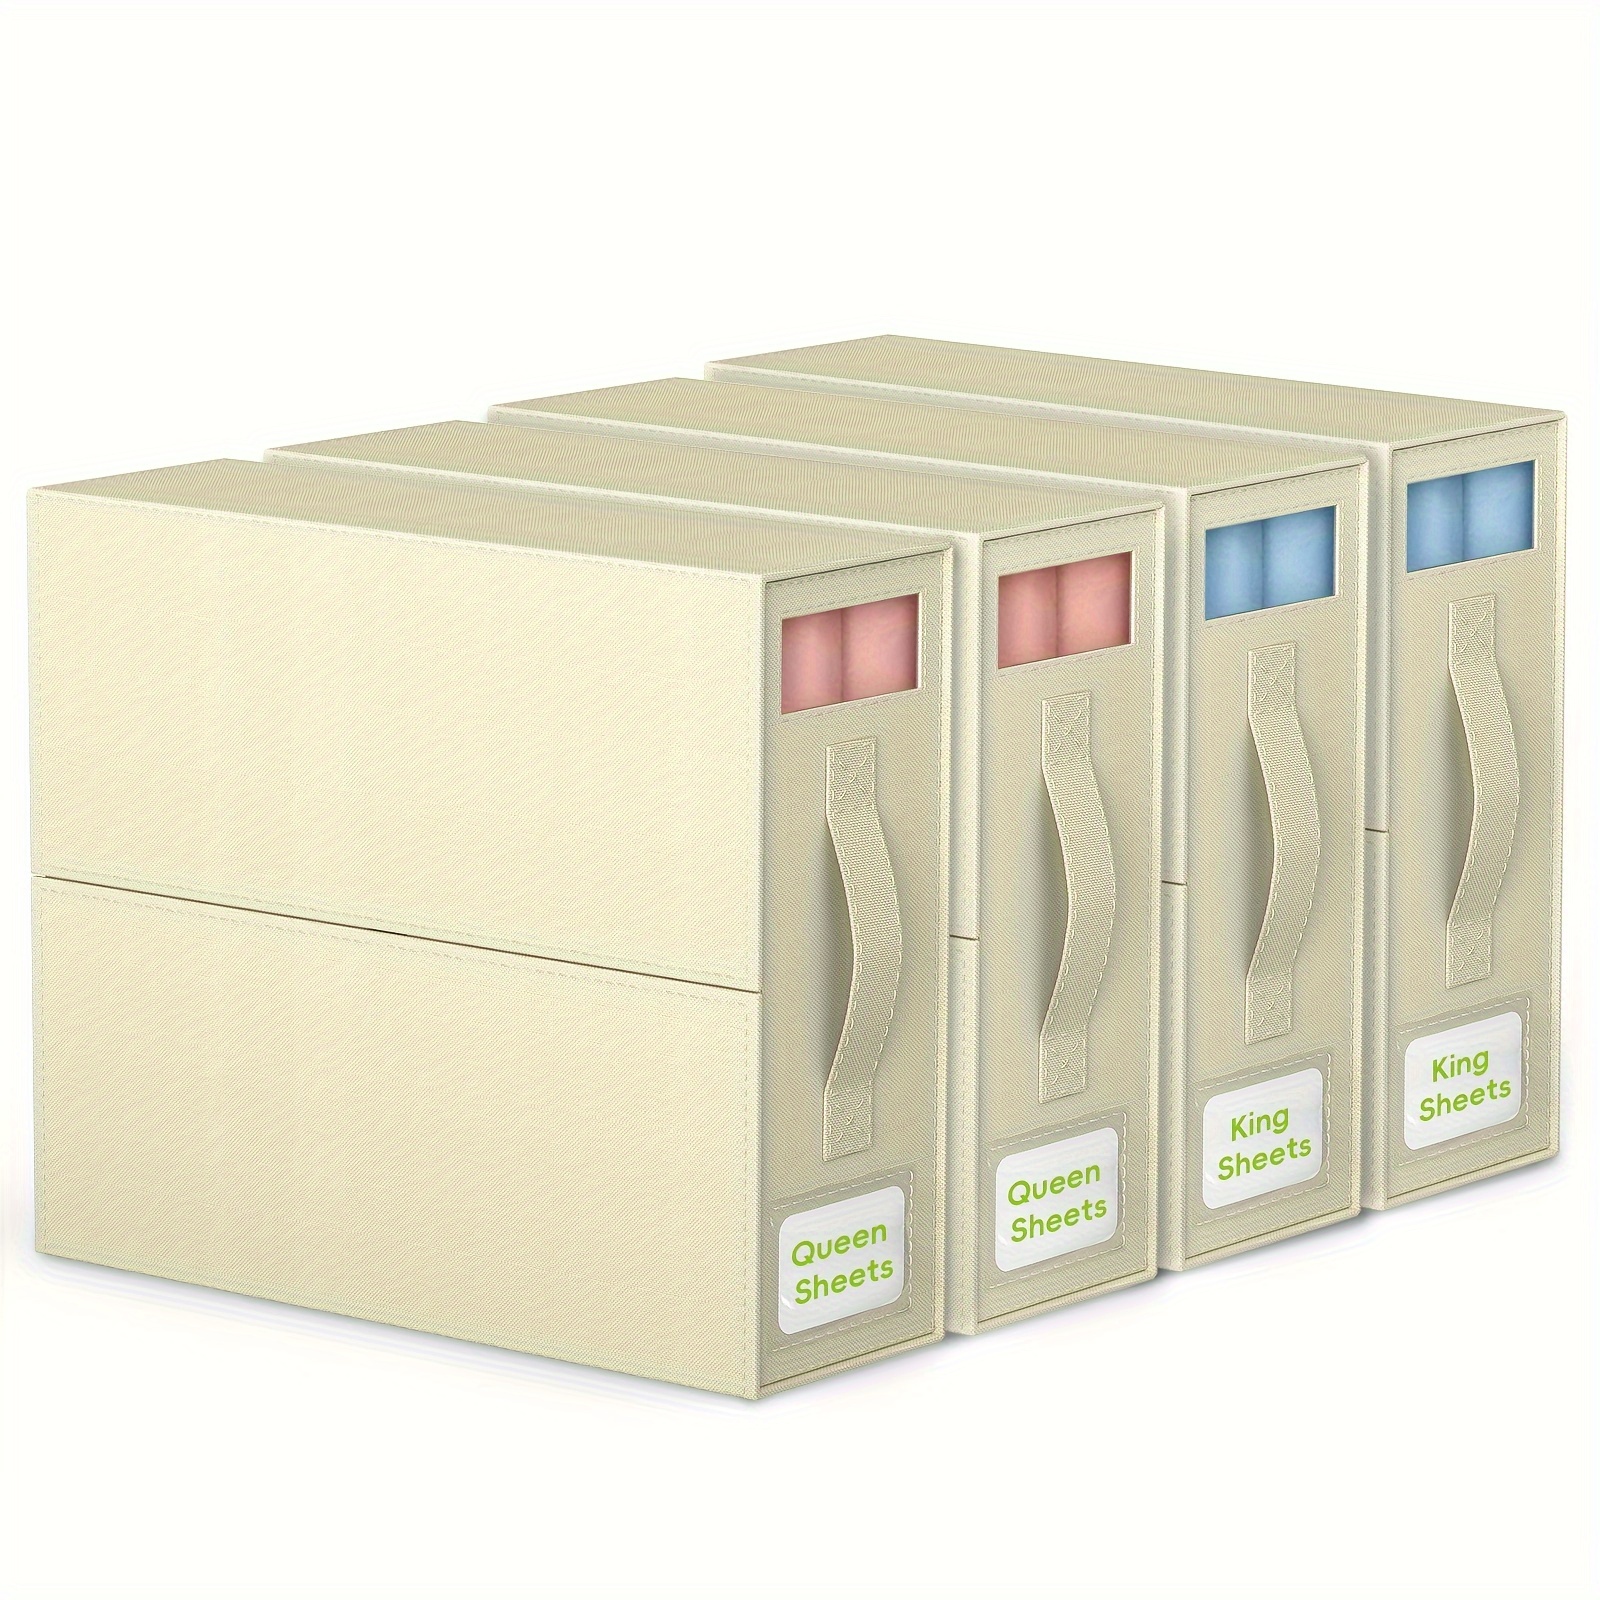 

Bed Sheet Organizer, Linen Closet Organizers And Storage, Foldable Cube Sheet Set Organizer (4 Pack)